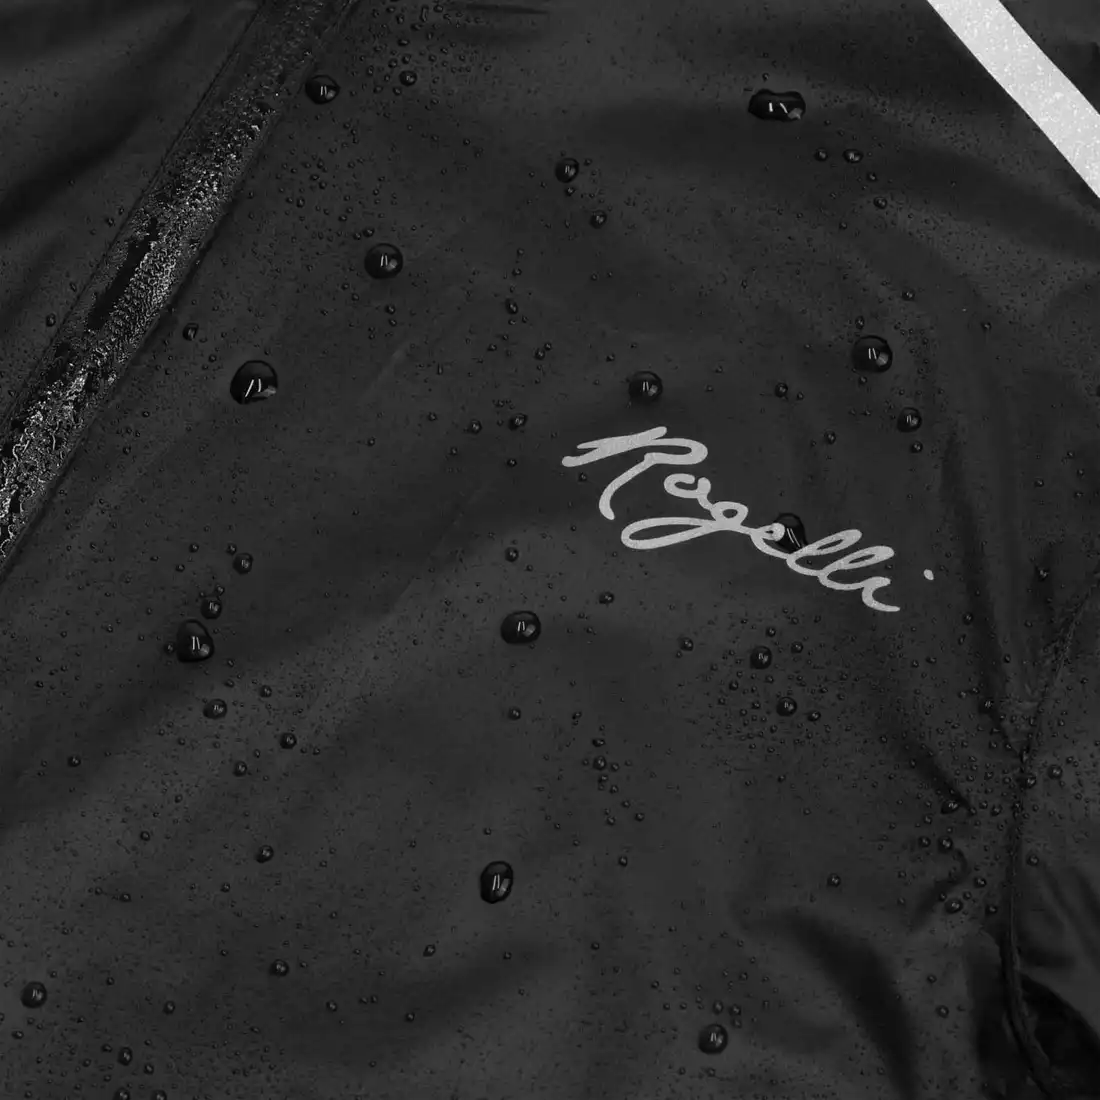 Rogelli ESSENTIAL dámska cyklistická bunda do dažďa, čierna